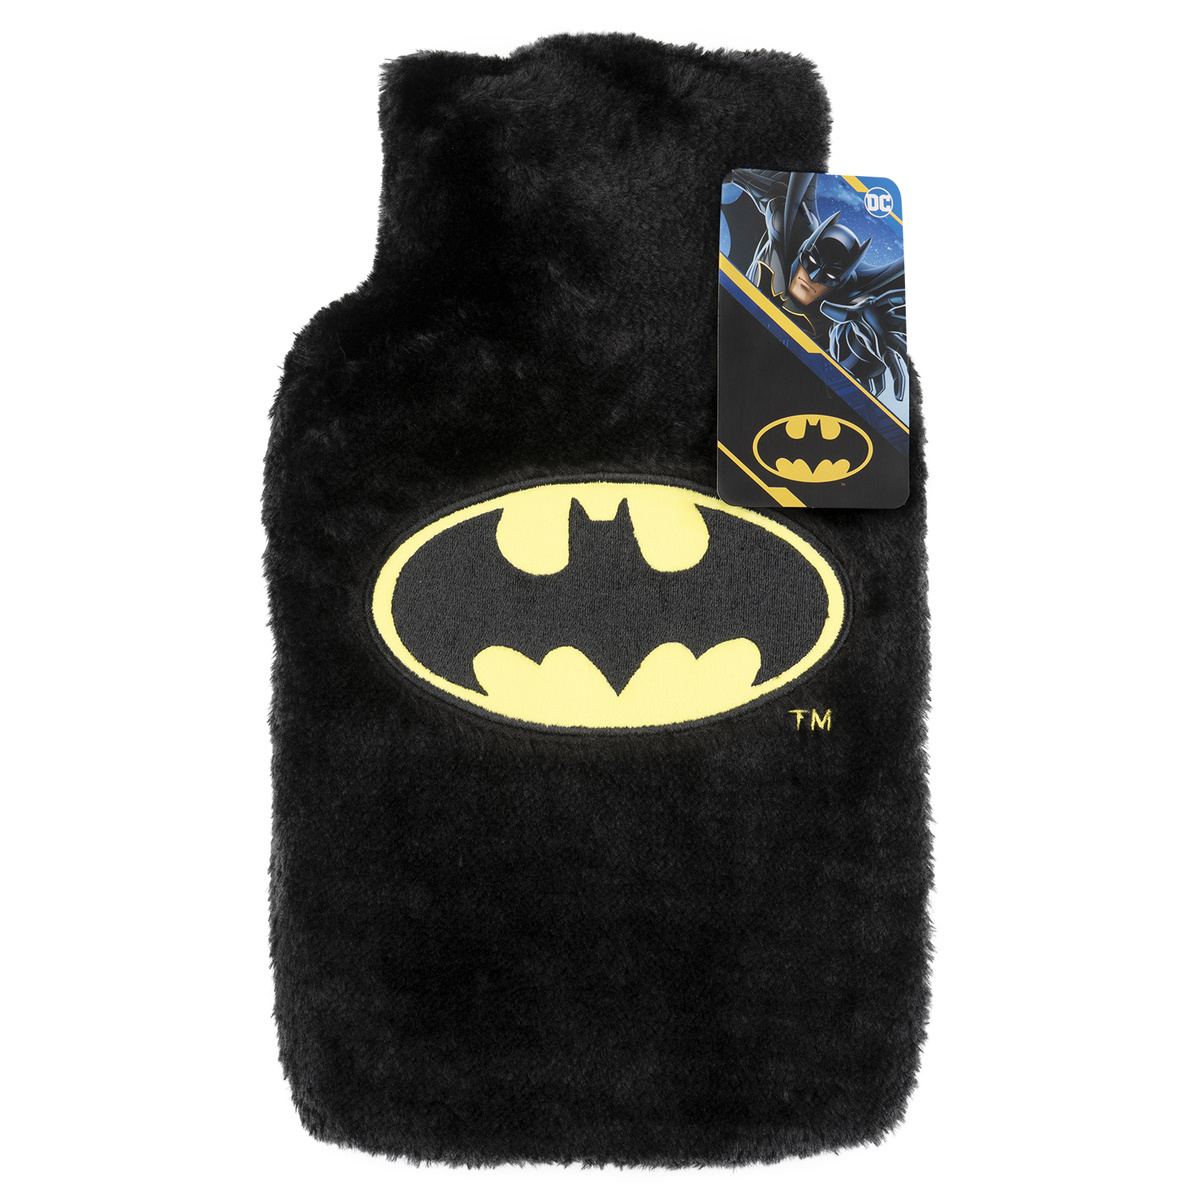 Big black hot water bottle 1.8l SOXO in a soft BATMAN cover Batman